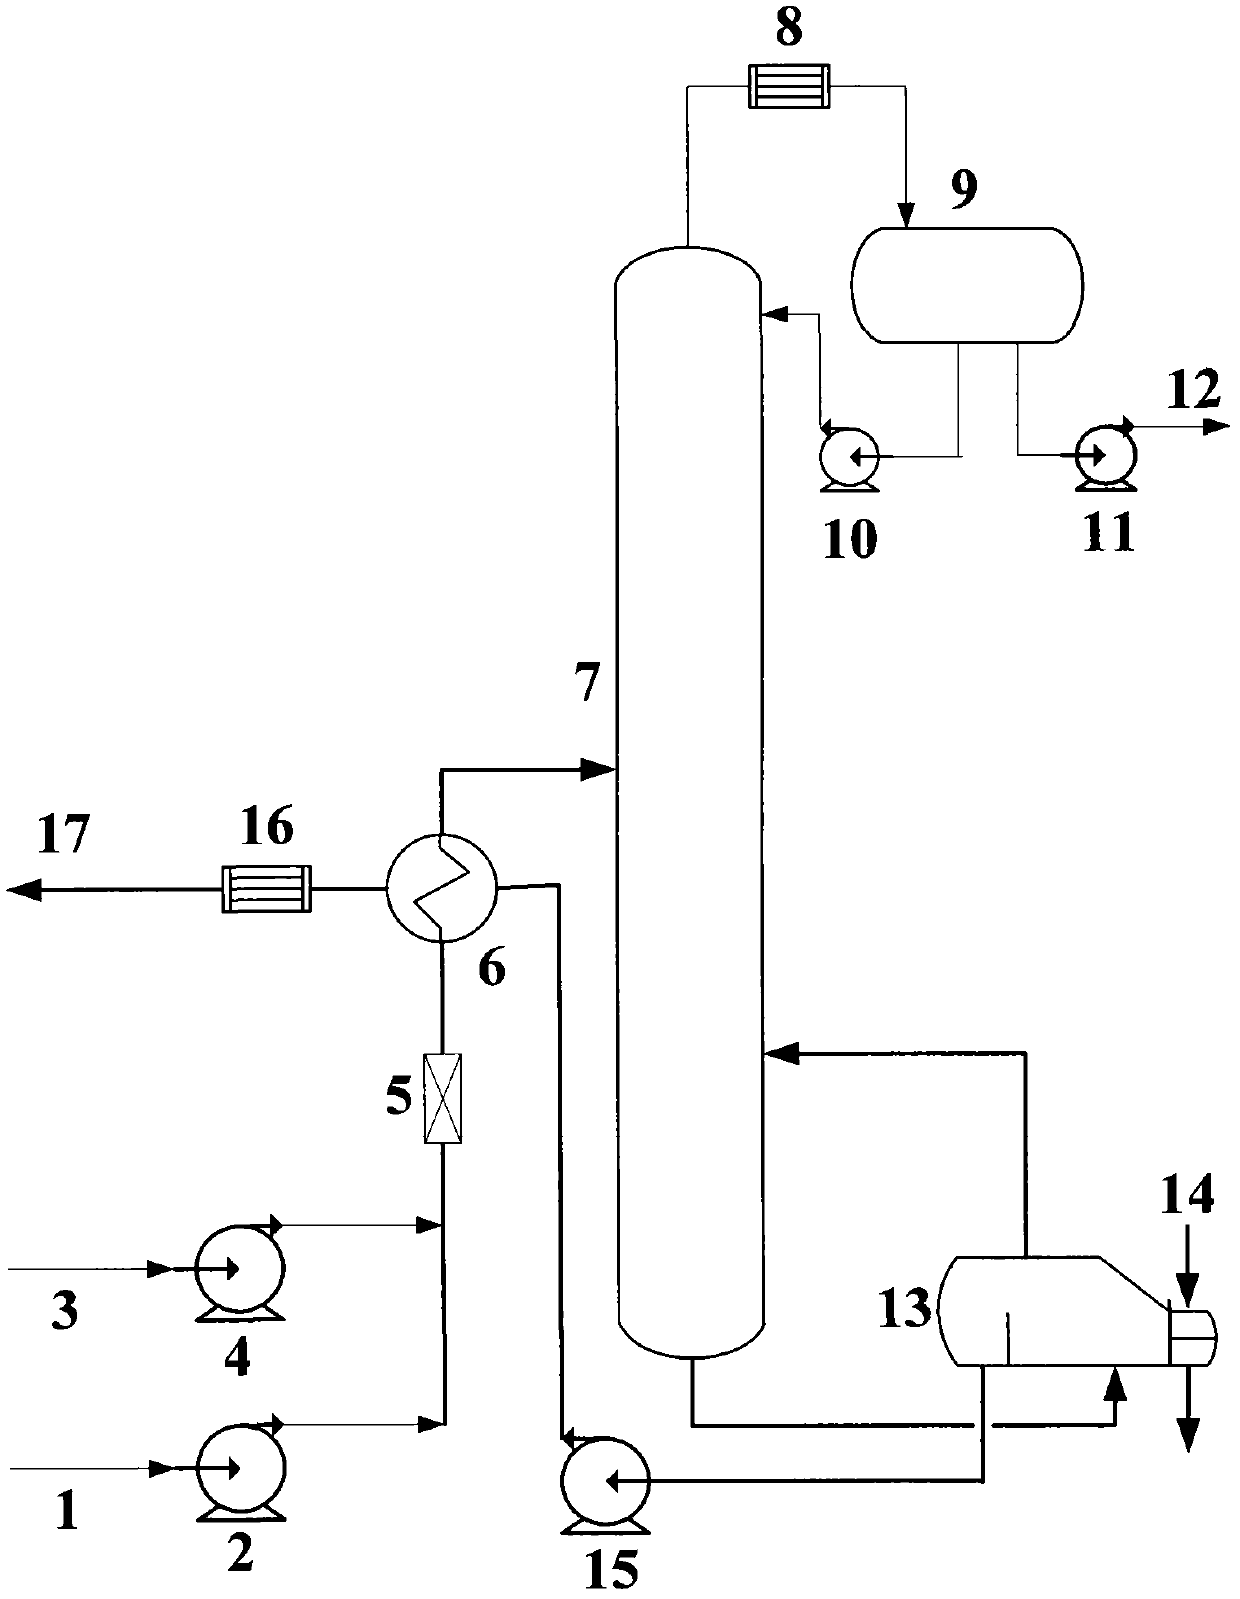 Method for deeply desulfurizing methyl tertiary butyl ether